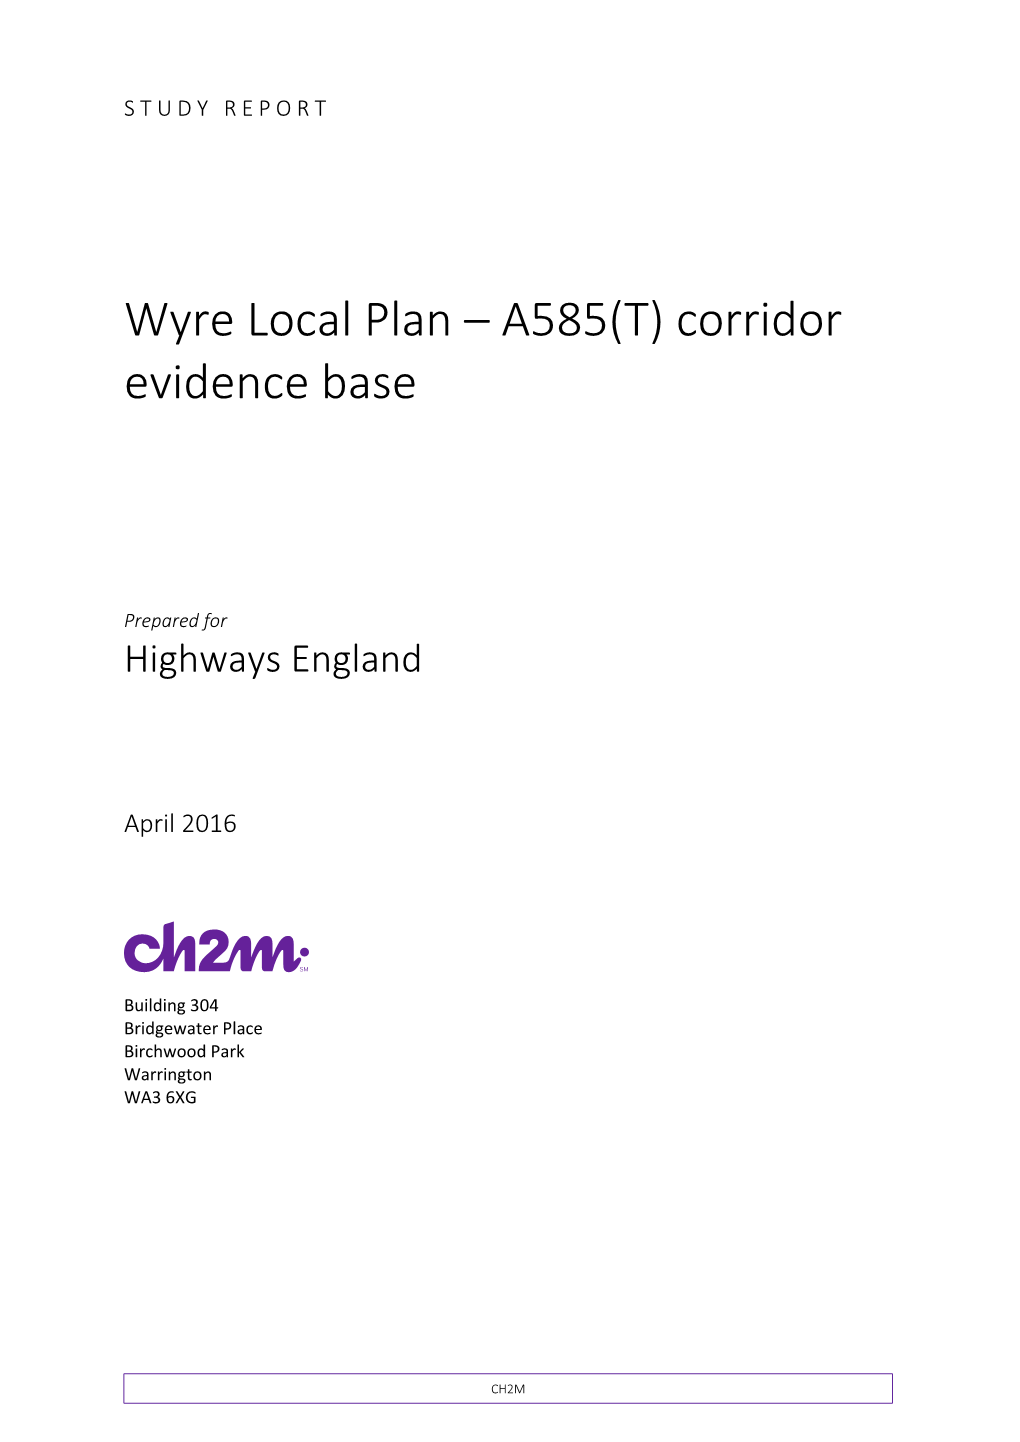 Wyre Local Plan – A585(T) Corridor Evidence Base